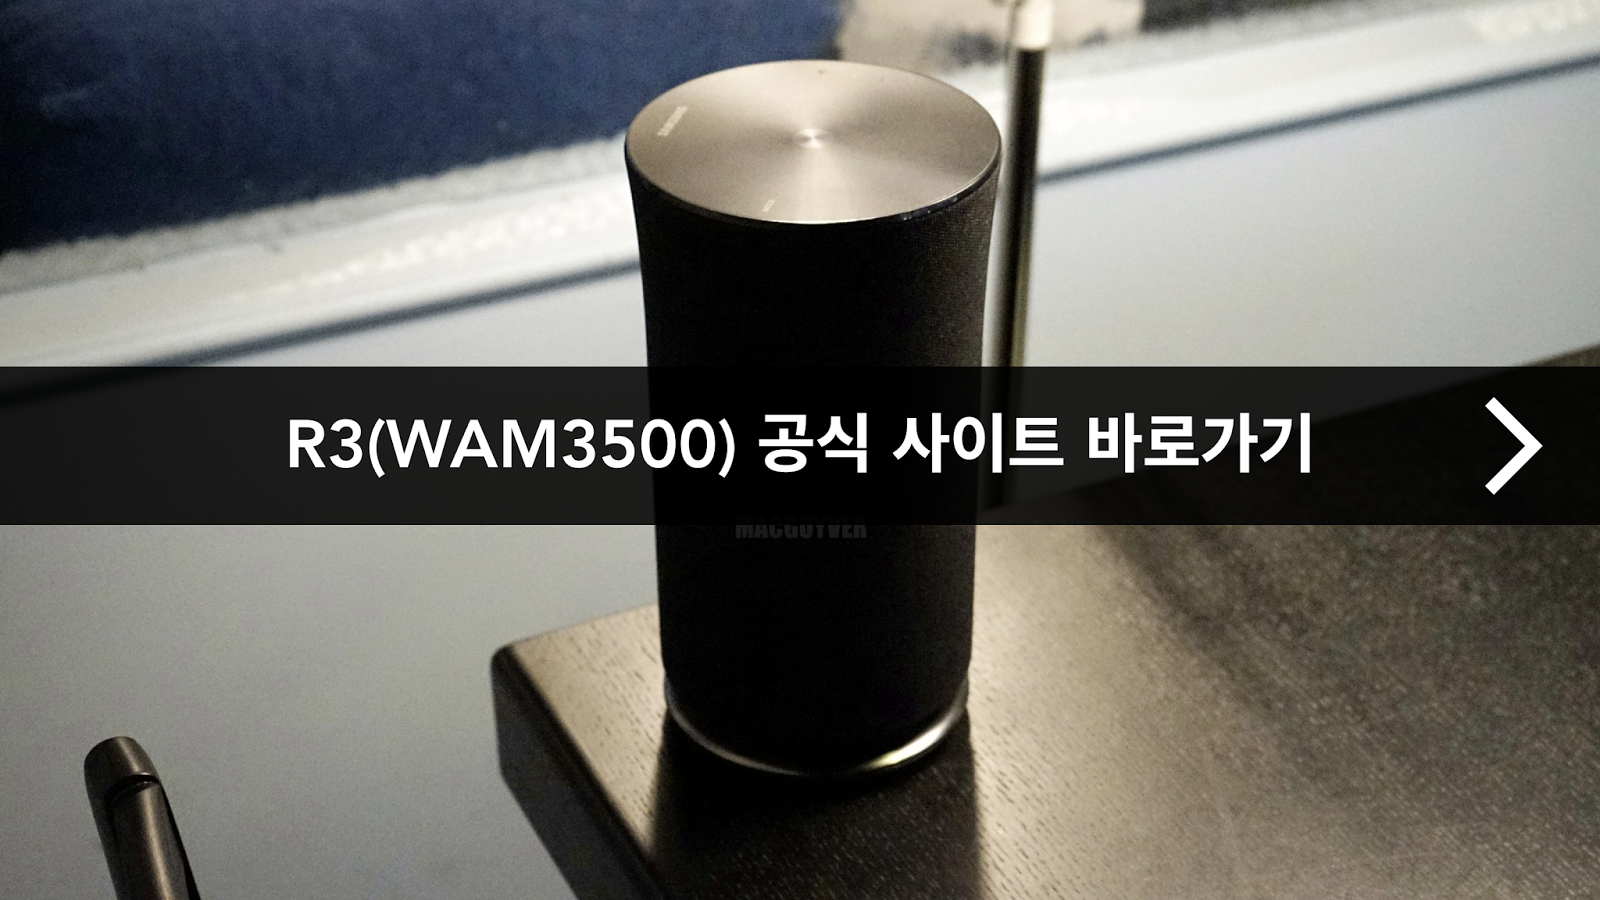 http://www.samsung.com/sec/audio-video/multiroom-360-sound-speaker-wam3500/